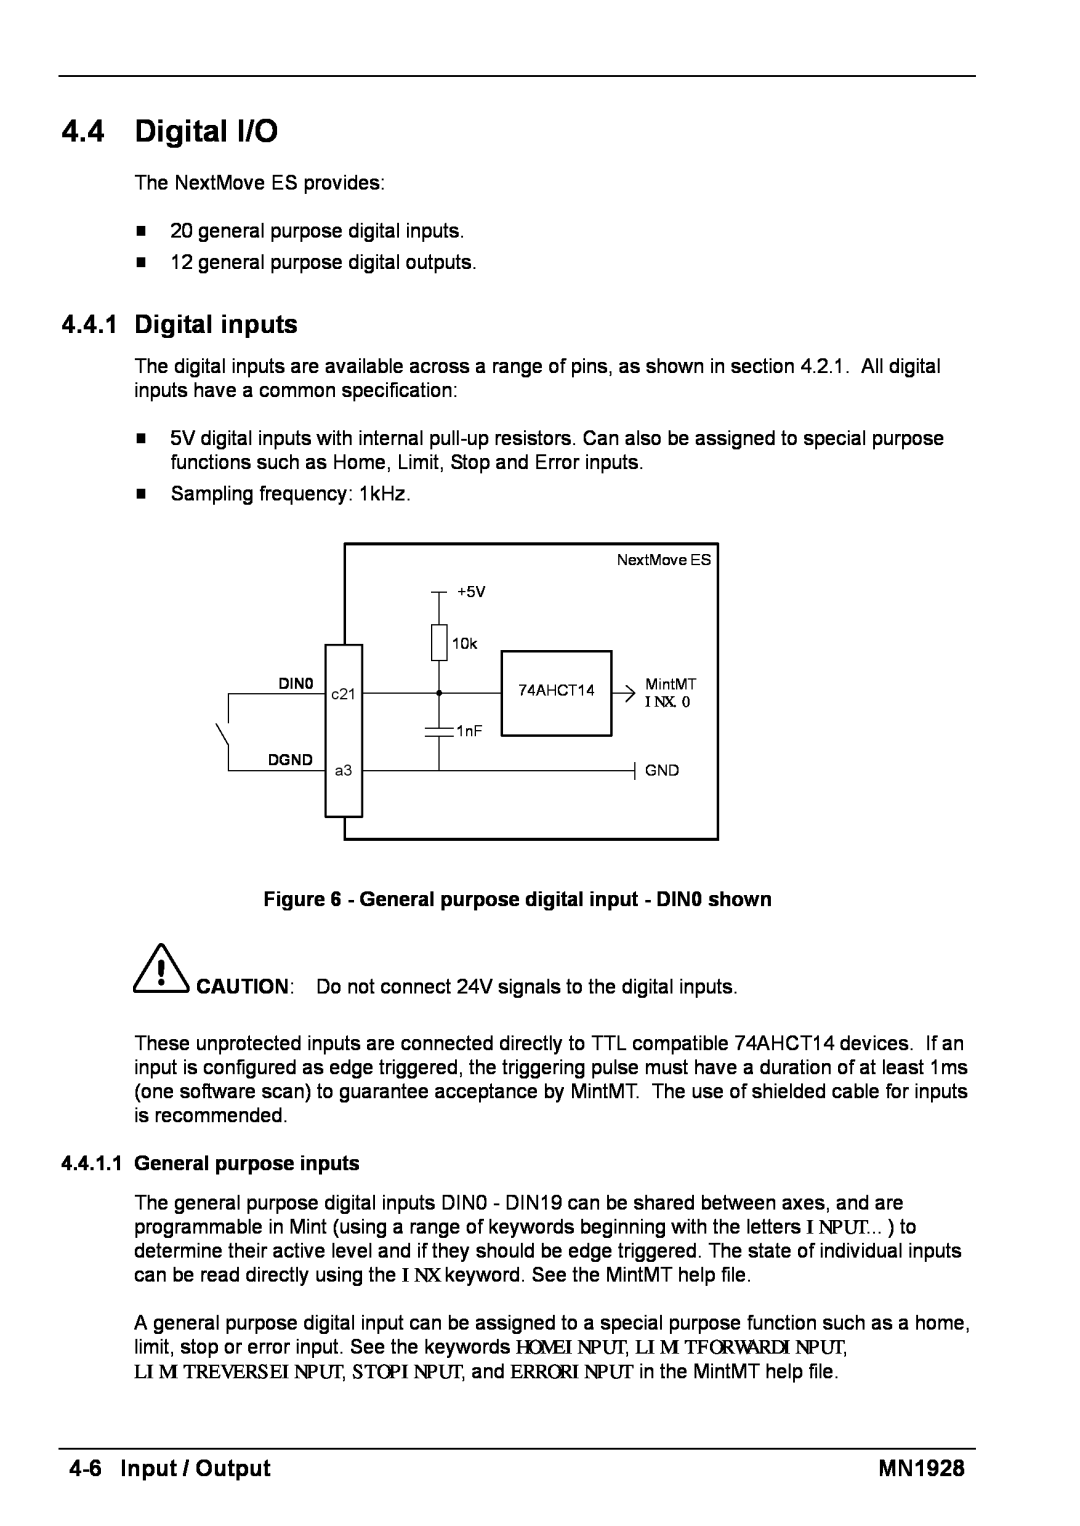 Baldor MN1928 installation manual Digital I/O, 4.4.1Digital inputs, 4-6Input / Output, 4.4.1.1General purpose inputs 